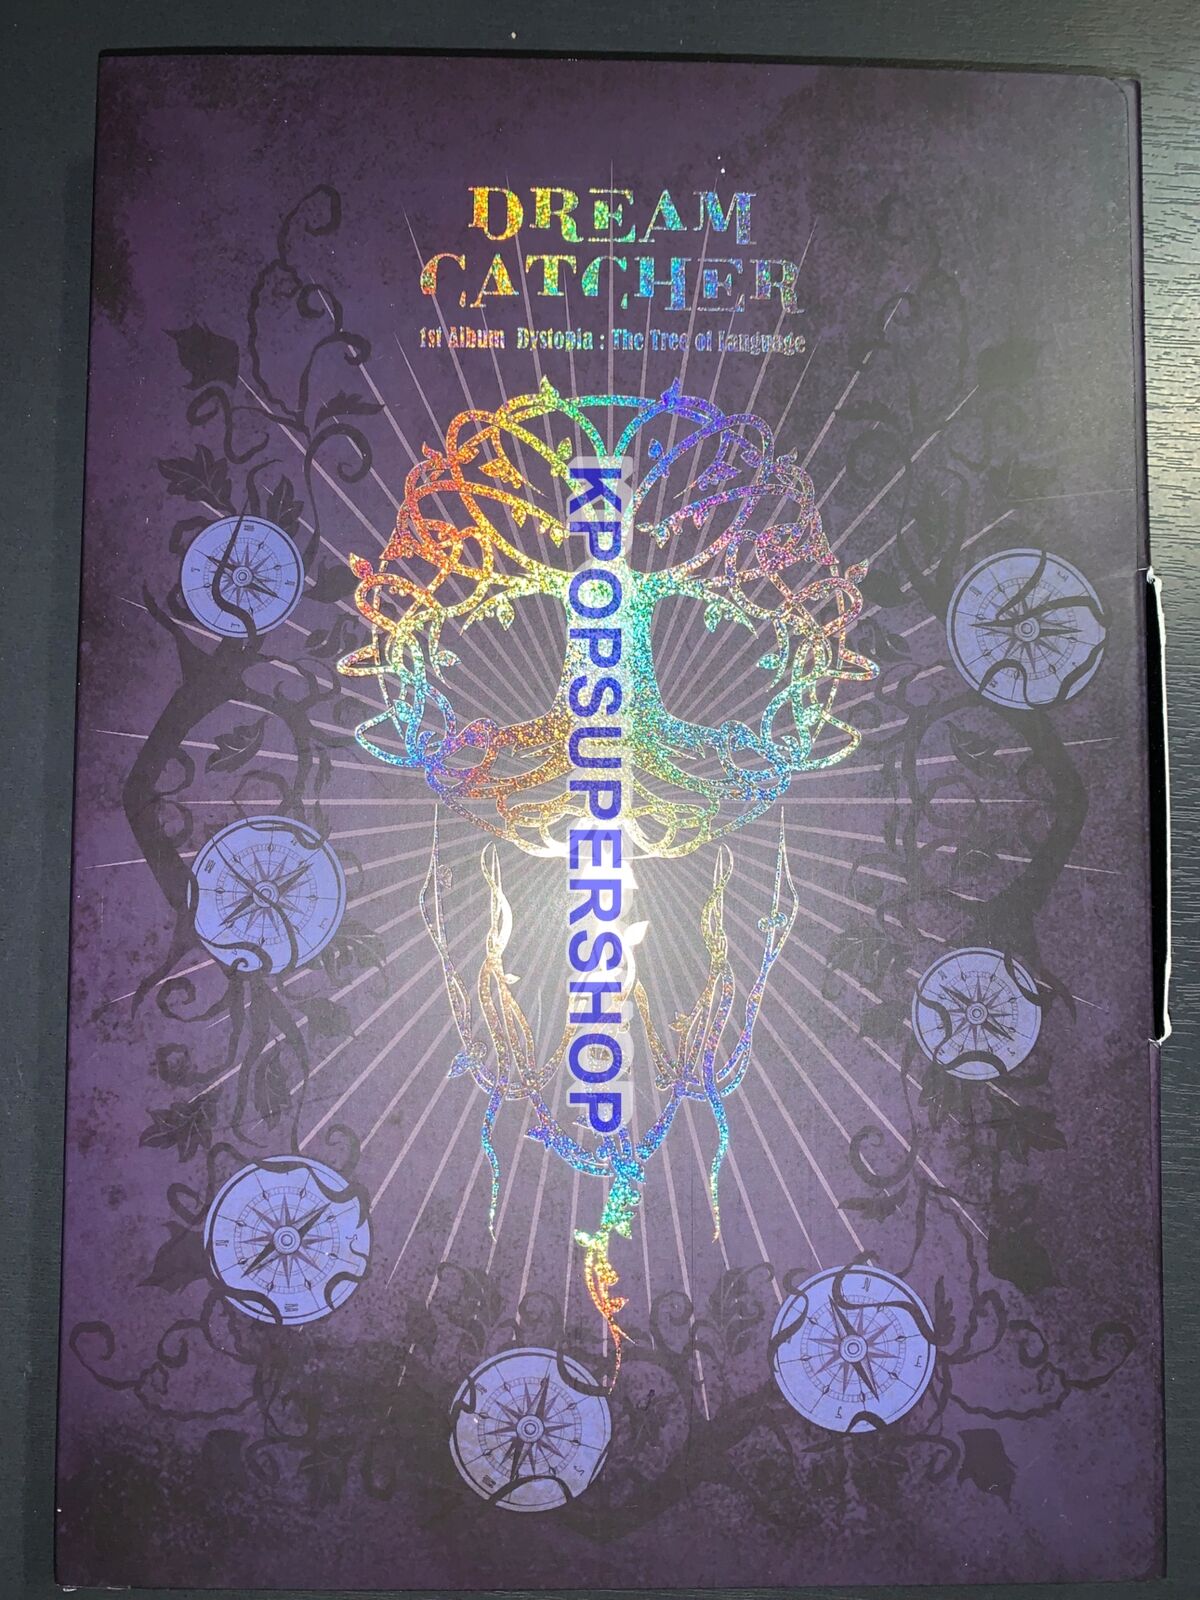 Dream Catcher 1st Album Dystopia The Tree of Language CD Good L